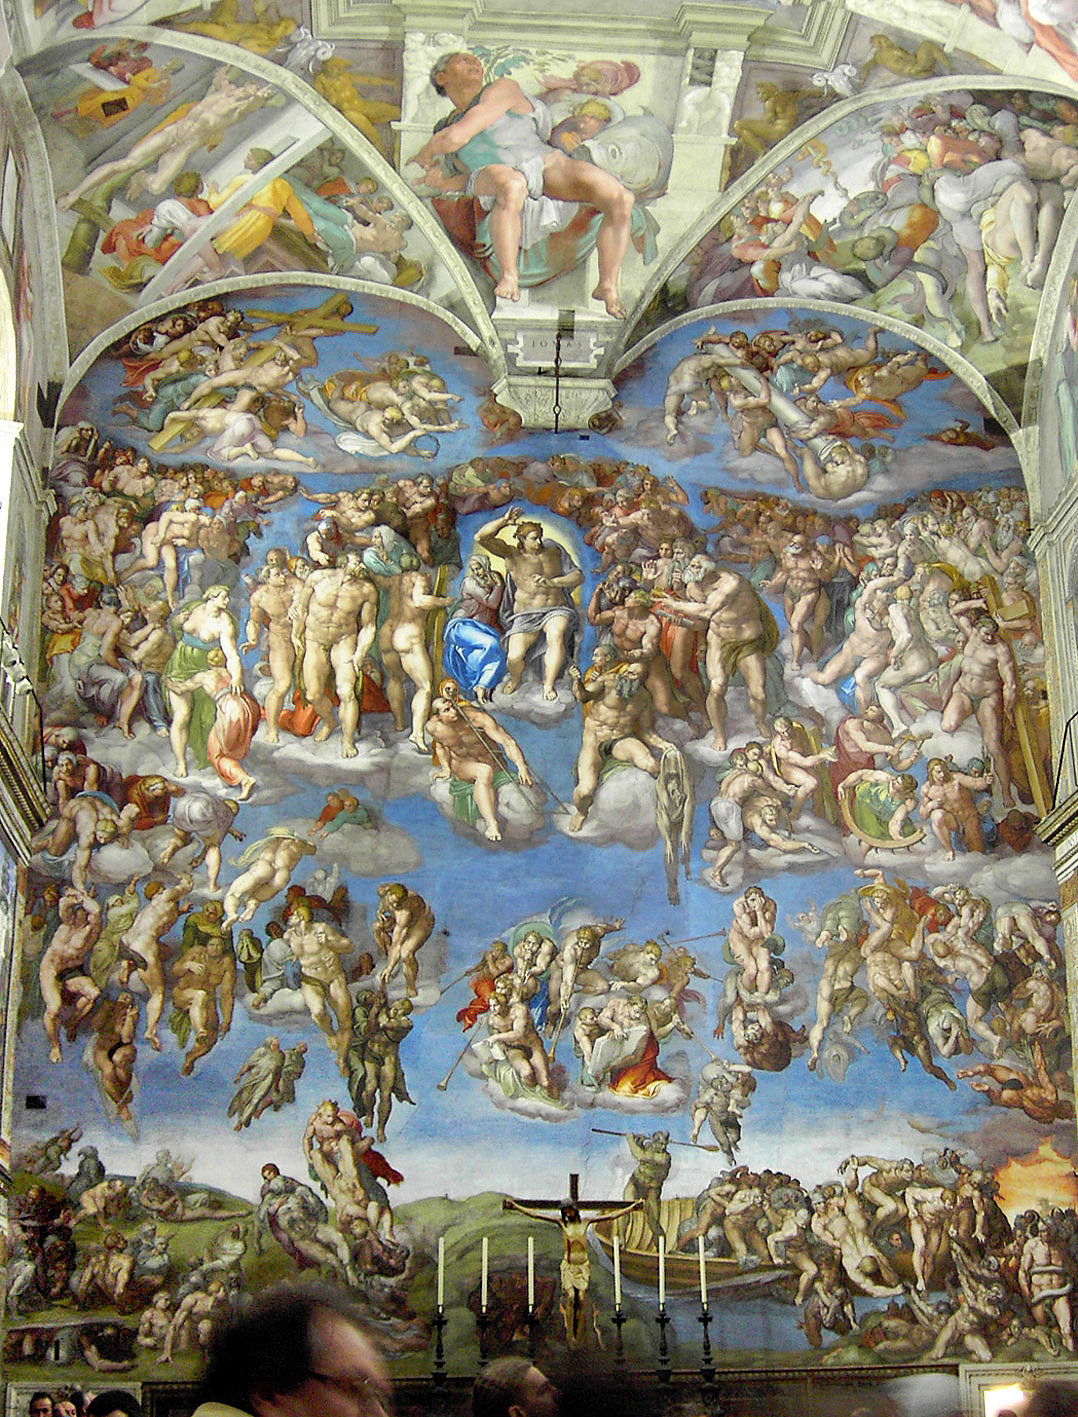 Michaelangelo Buonarroti, The Last Judgment, Oil and tempera on panel, 1,370 cm × 1,200 cm, 1534–1541, at Sistine Chapel, Rome